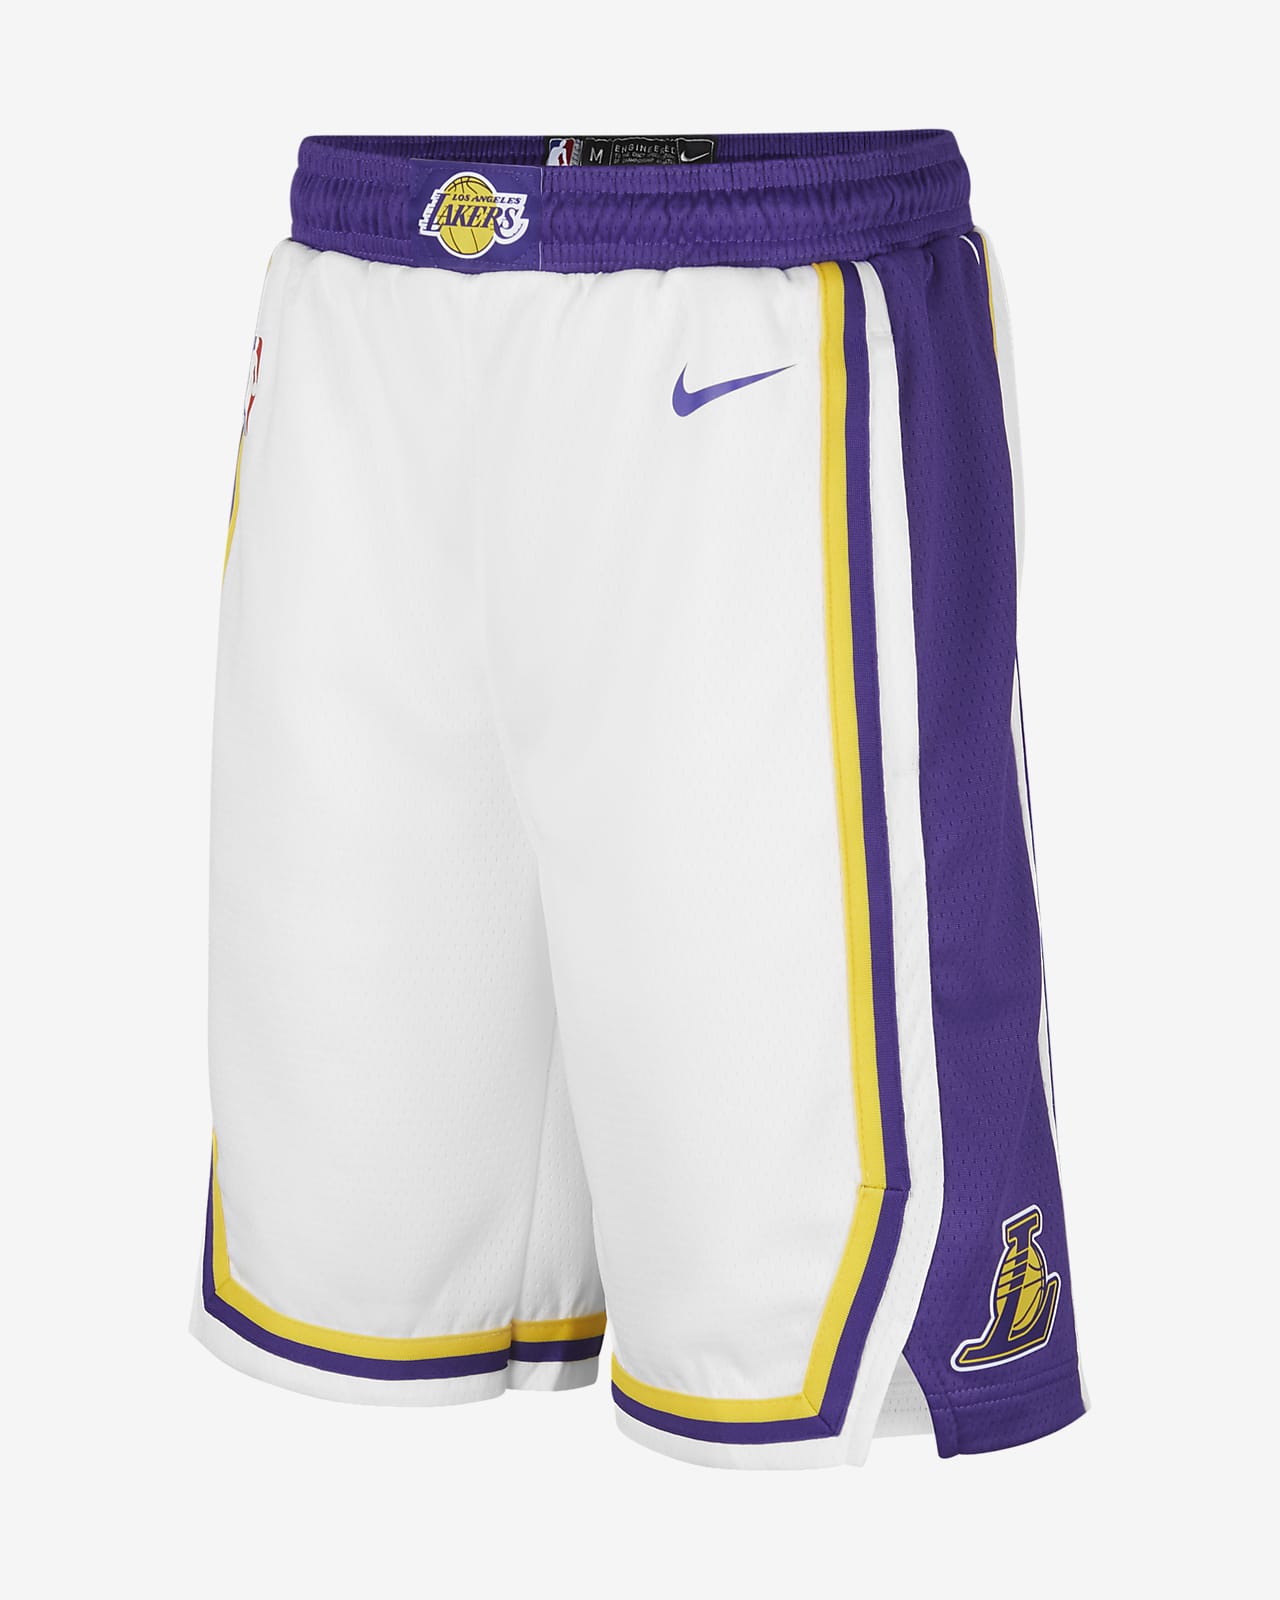 洛杉矶湖人队 Association Edition Nike NBA Swingman 大童（男孩）短裤